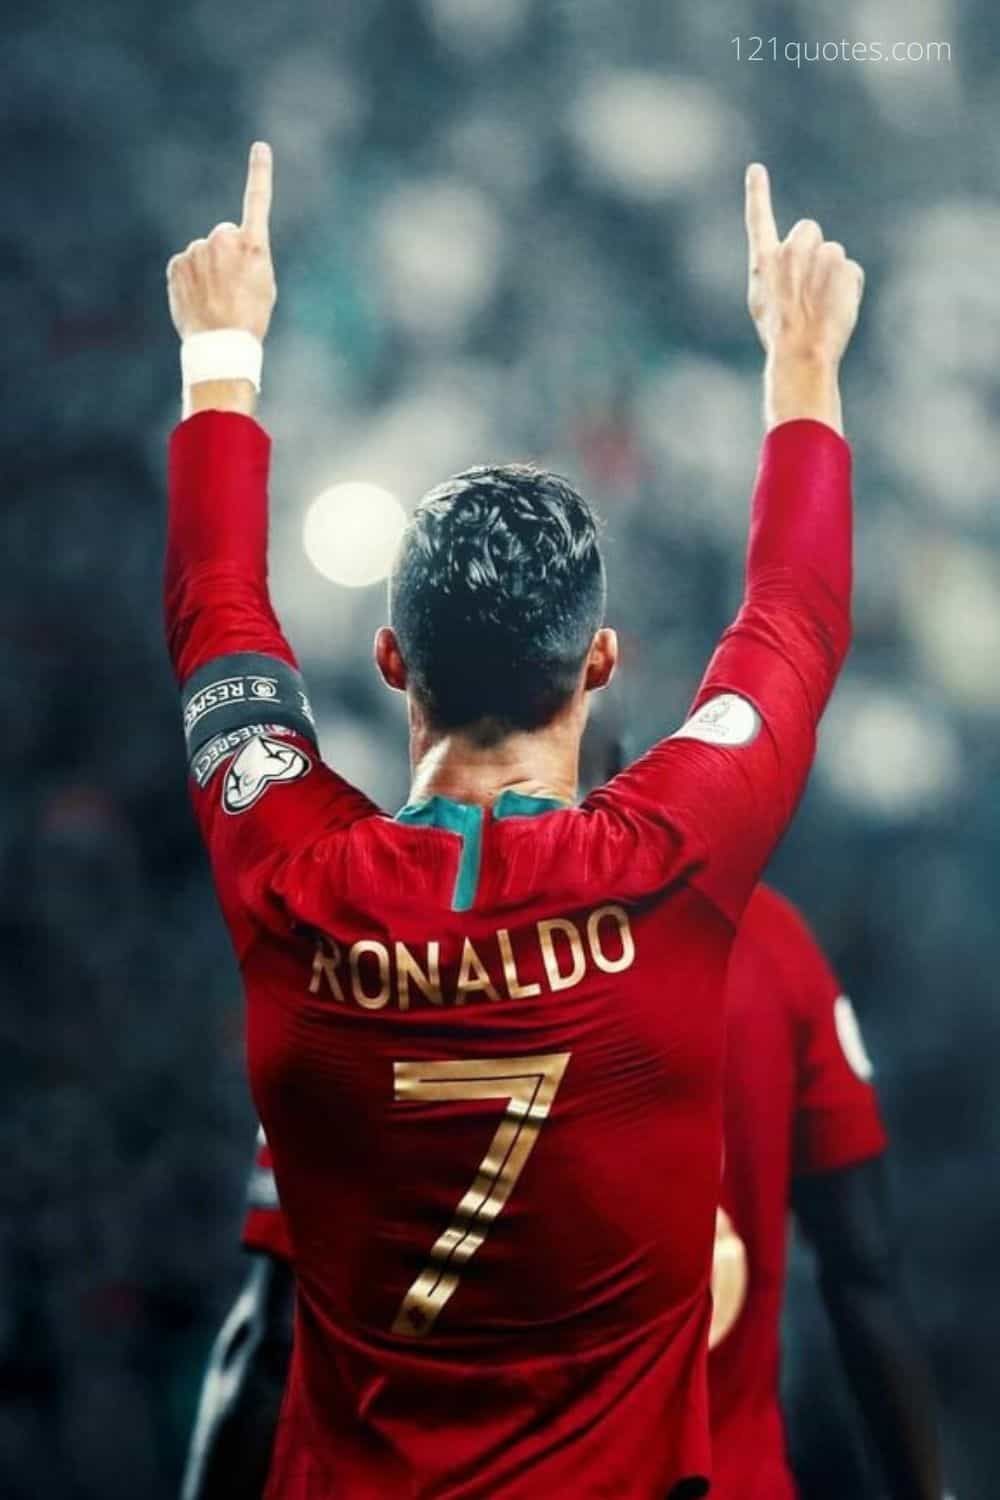 Cristiano Ronaldo Wallpaper. Ronaldo wallpaper, Cristiano ronaldo wallpaper, Cristiano ronaldo